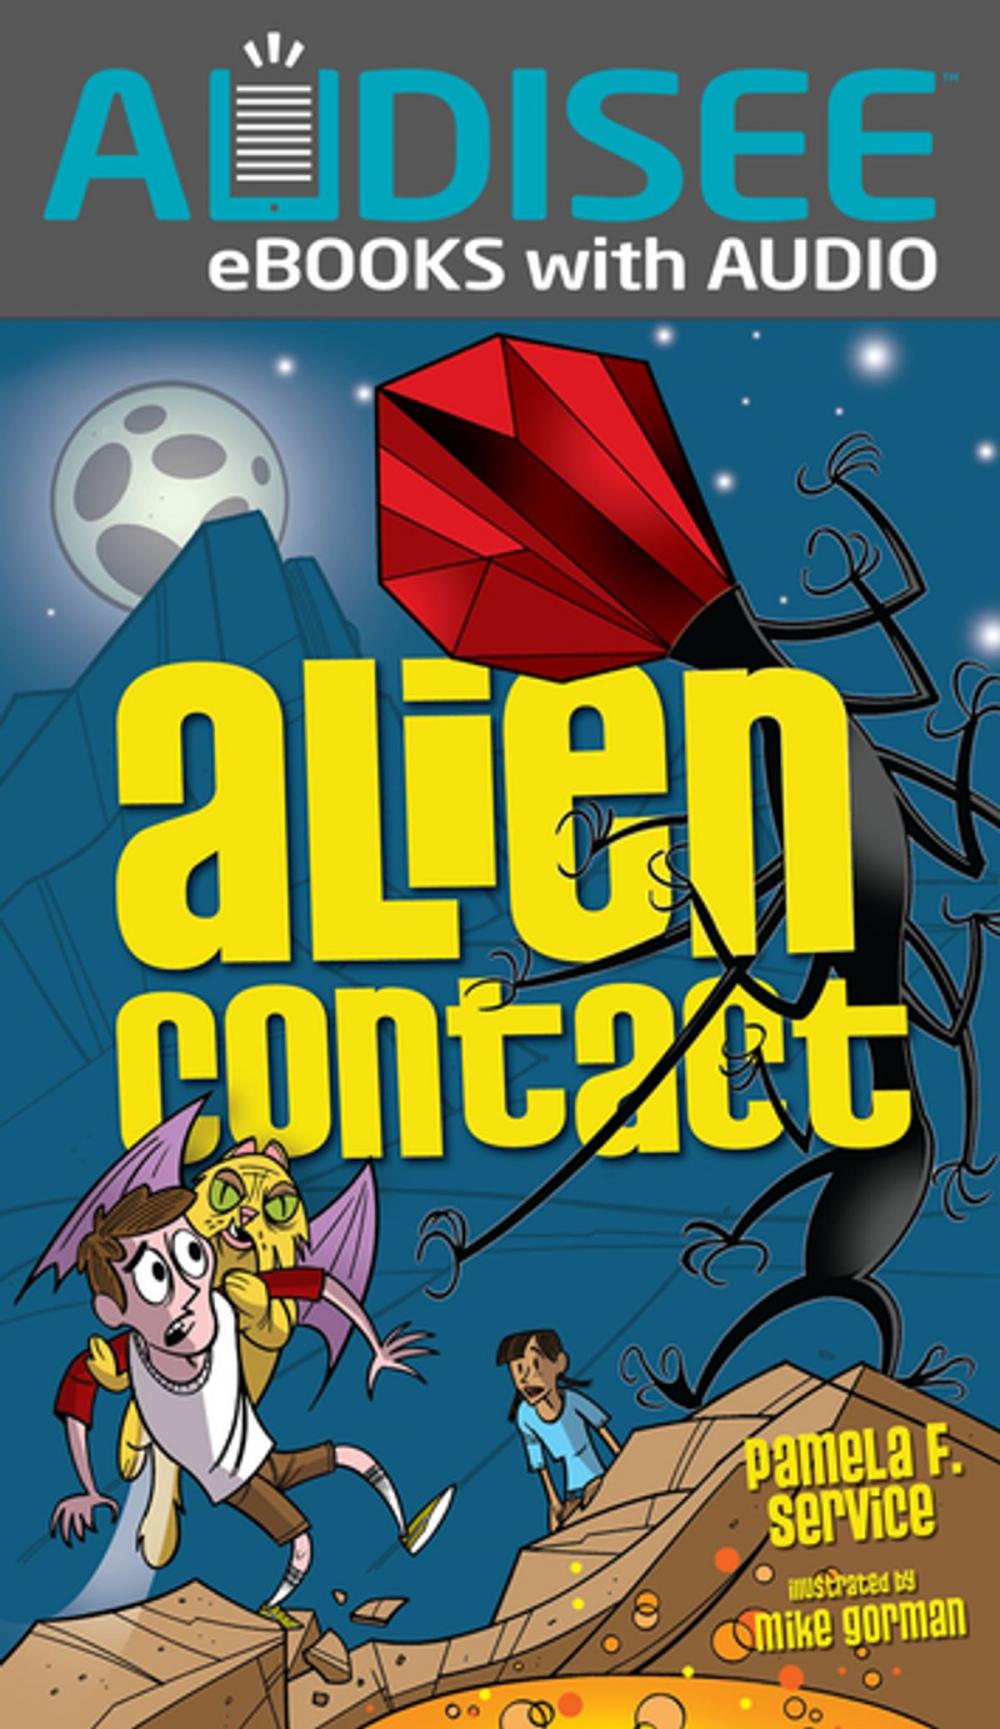 Big bigCover of Alien Contact